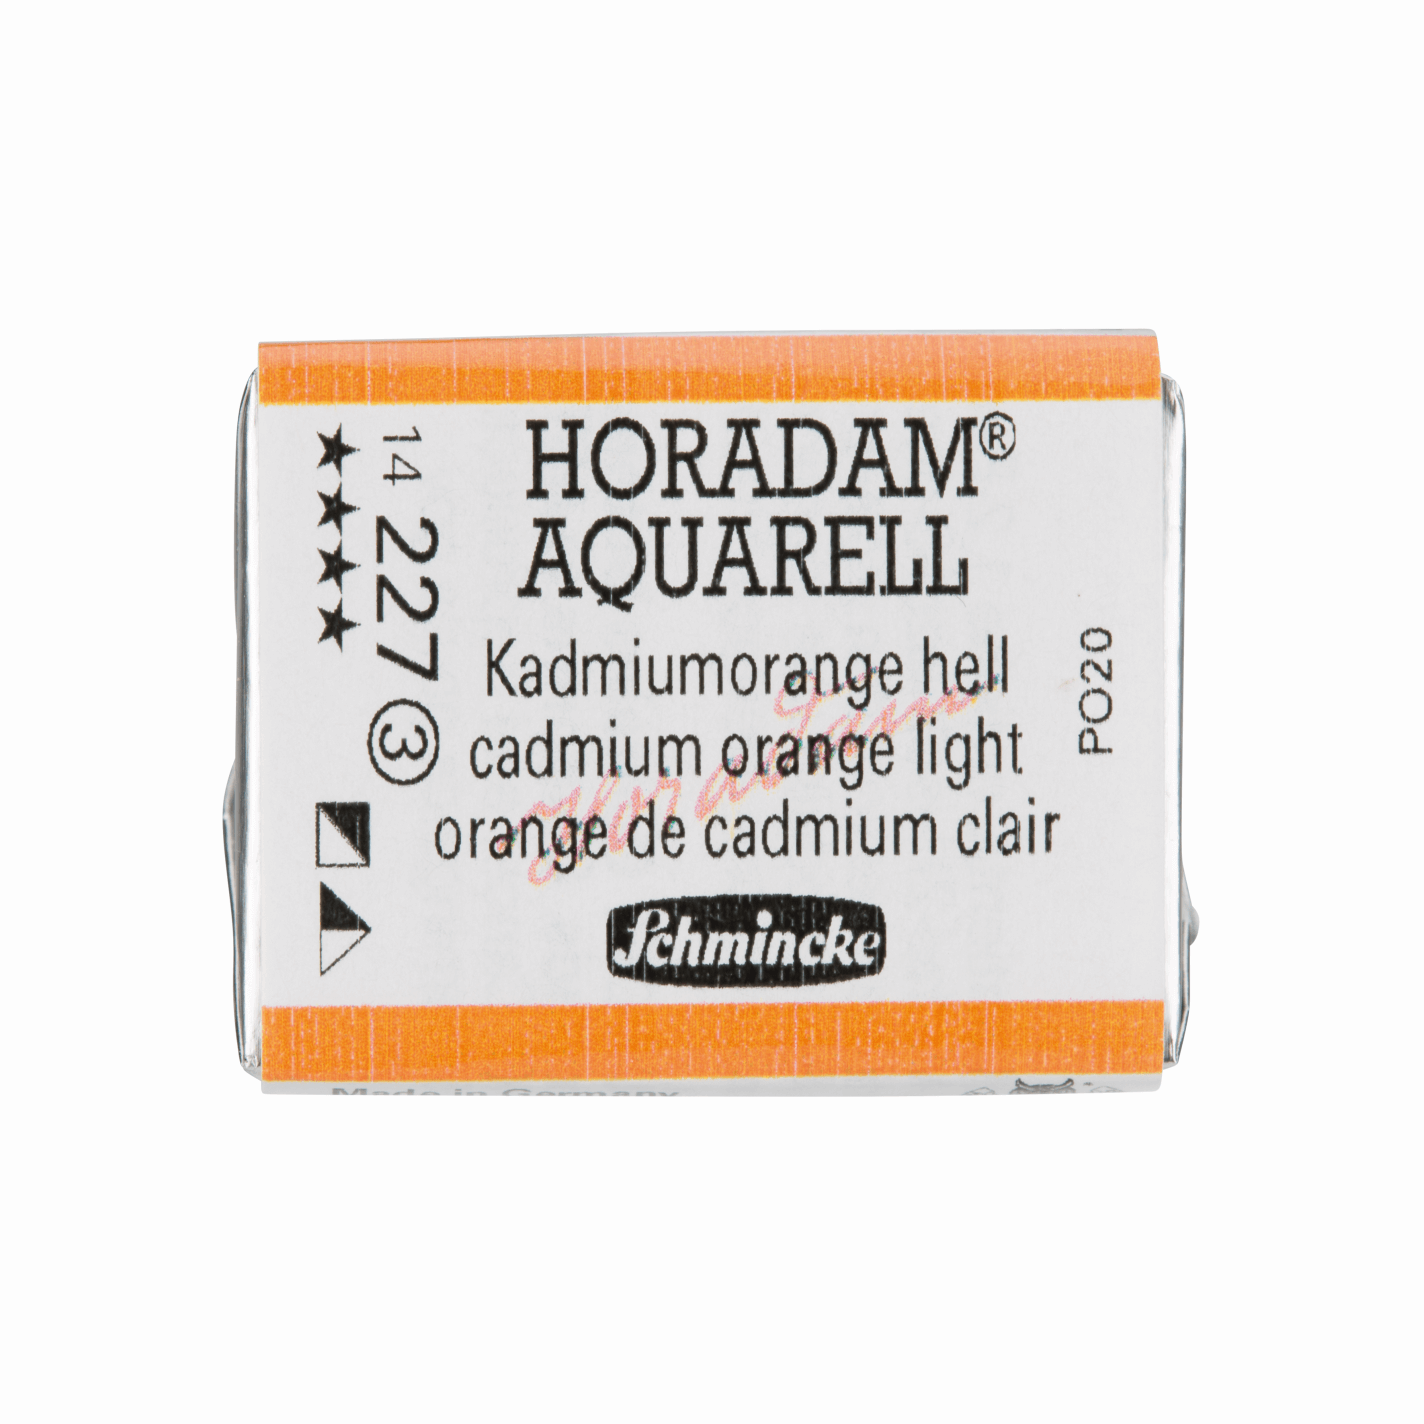 Schmincke Horadam Aquarell pans 1/1 pan Cadmium Orange Light